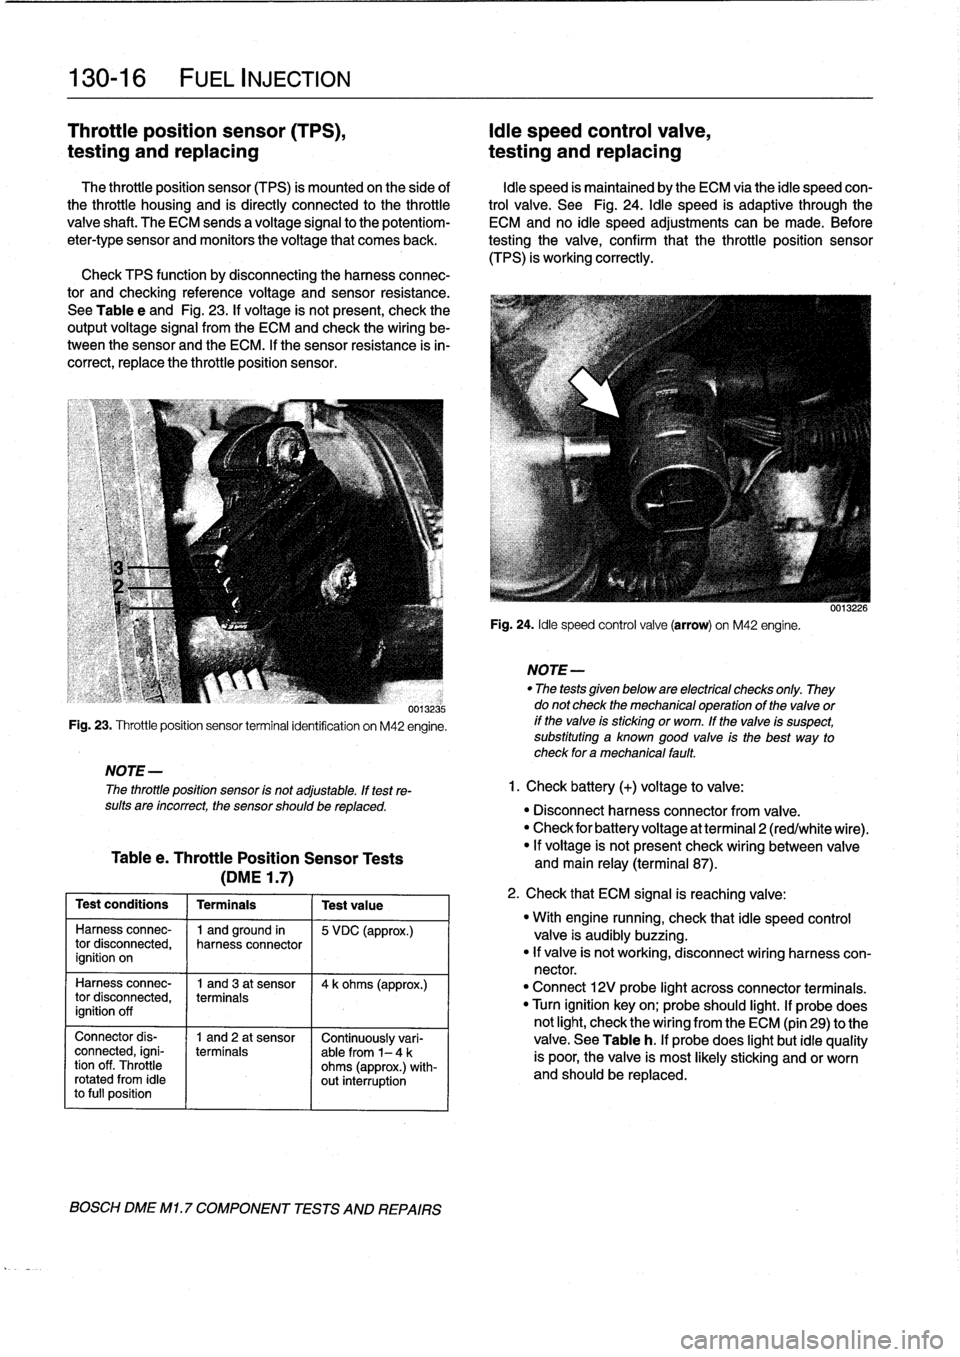 BMW 318i 1997 E36 Workshop Manual 
130-
1
6

	

FUEL
INJECTION

Throttie
position
sensor
(TPS),

	

Idie
speed
control
valve,
testing
and
replacing

	

testing
and
replacing

The
throttie
position
sensor
(TPS)
is
mounted
on
the
side
o